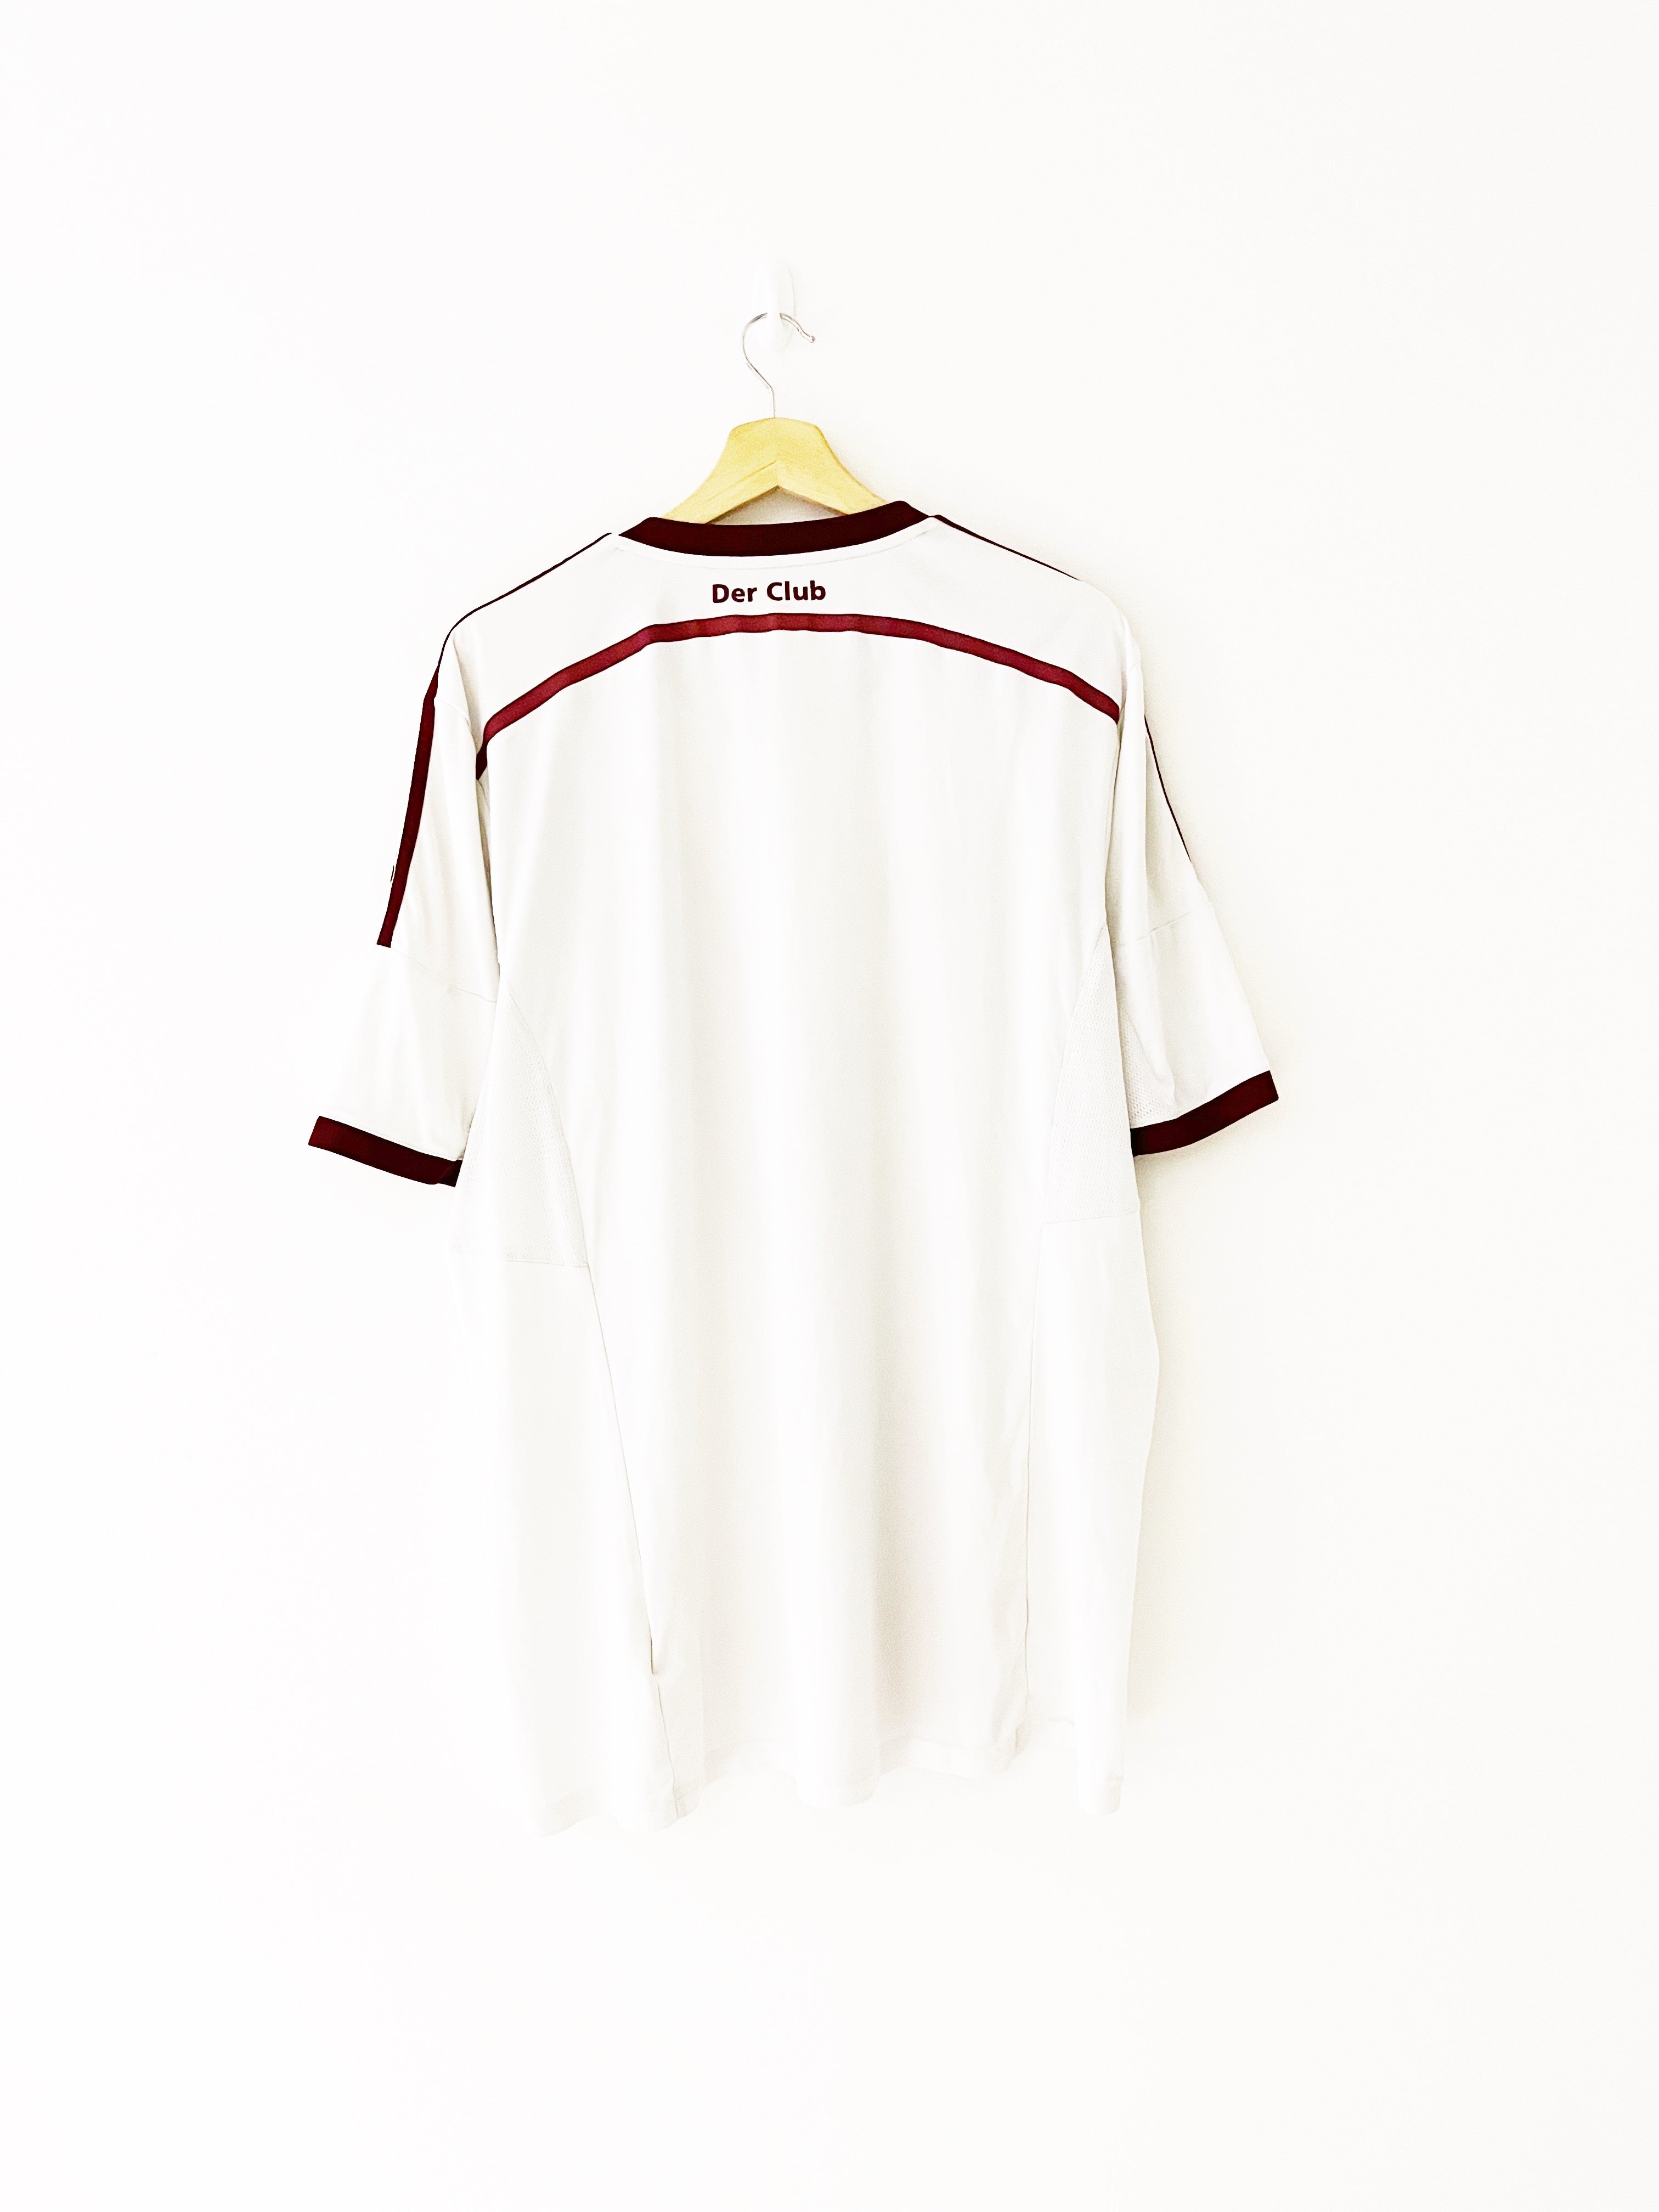 2014/15 FC Nurnberg Pre Season Away Shirt (XXL) 9/10